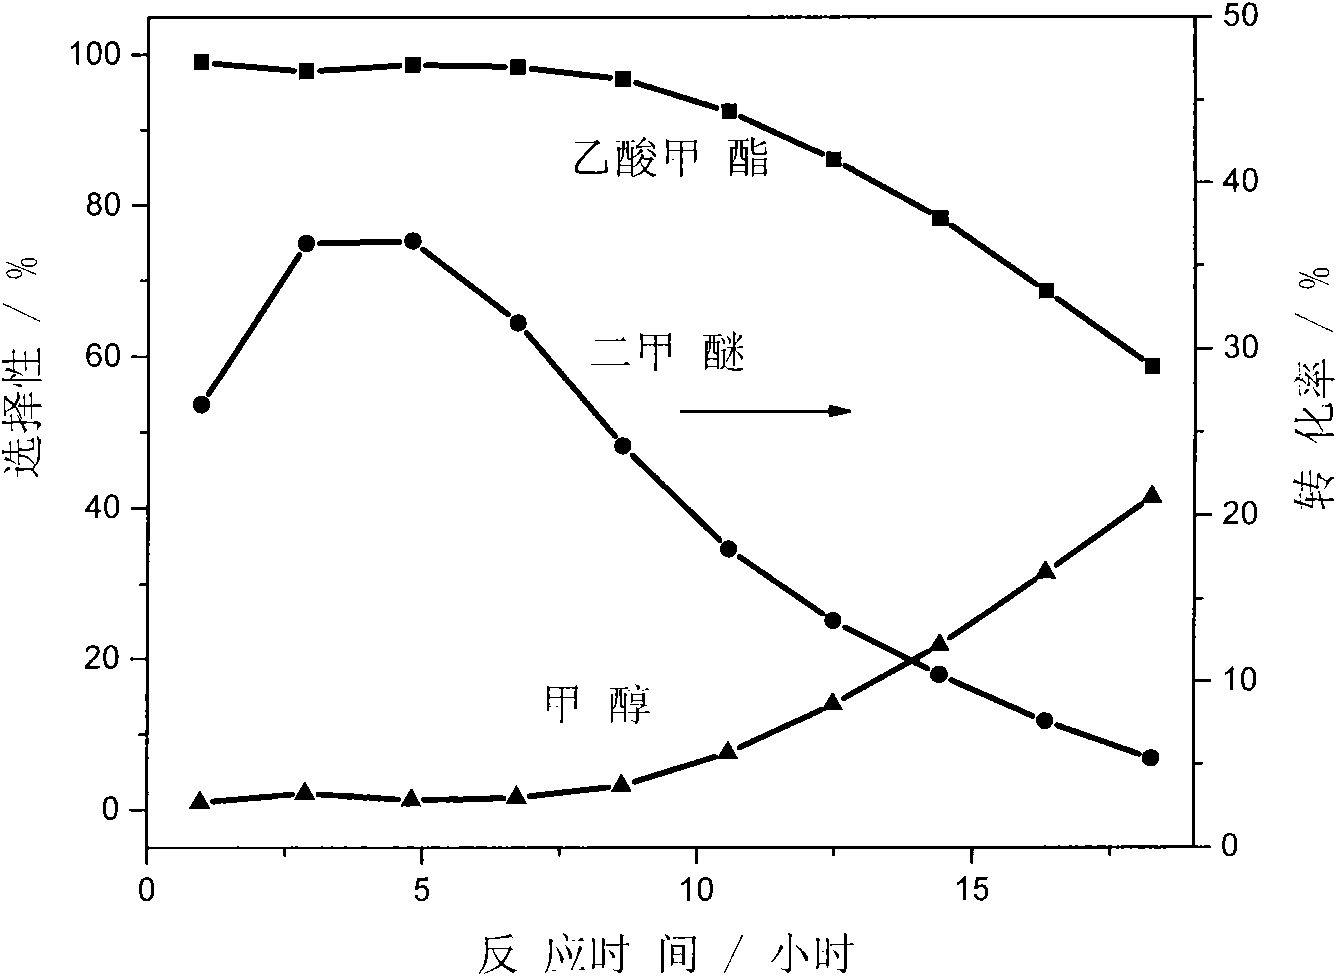 Method for preparing methyl acetate by carbonylating dimethyl ether